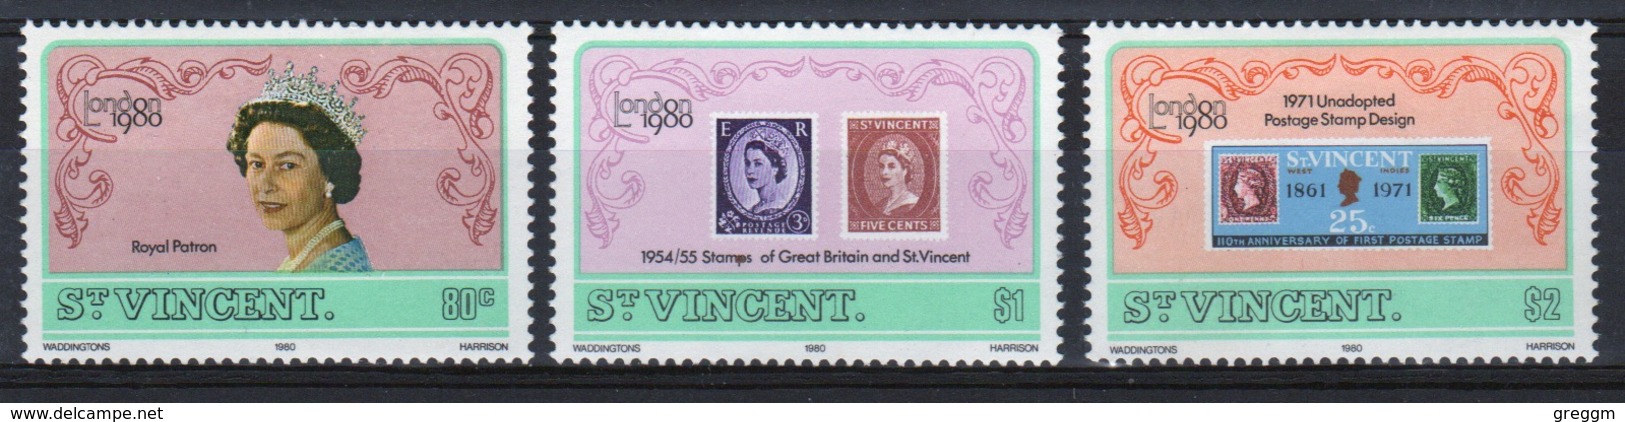 St.Vincent 1980 Set Of Stamps To Celebrate London 1980 Stamp Exhibition. - St.Vincent (1979-...)